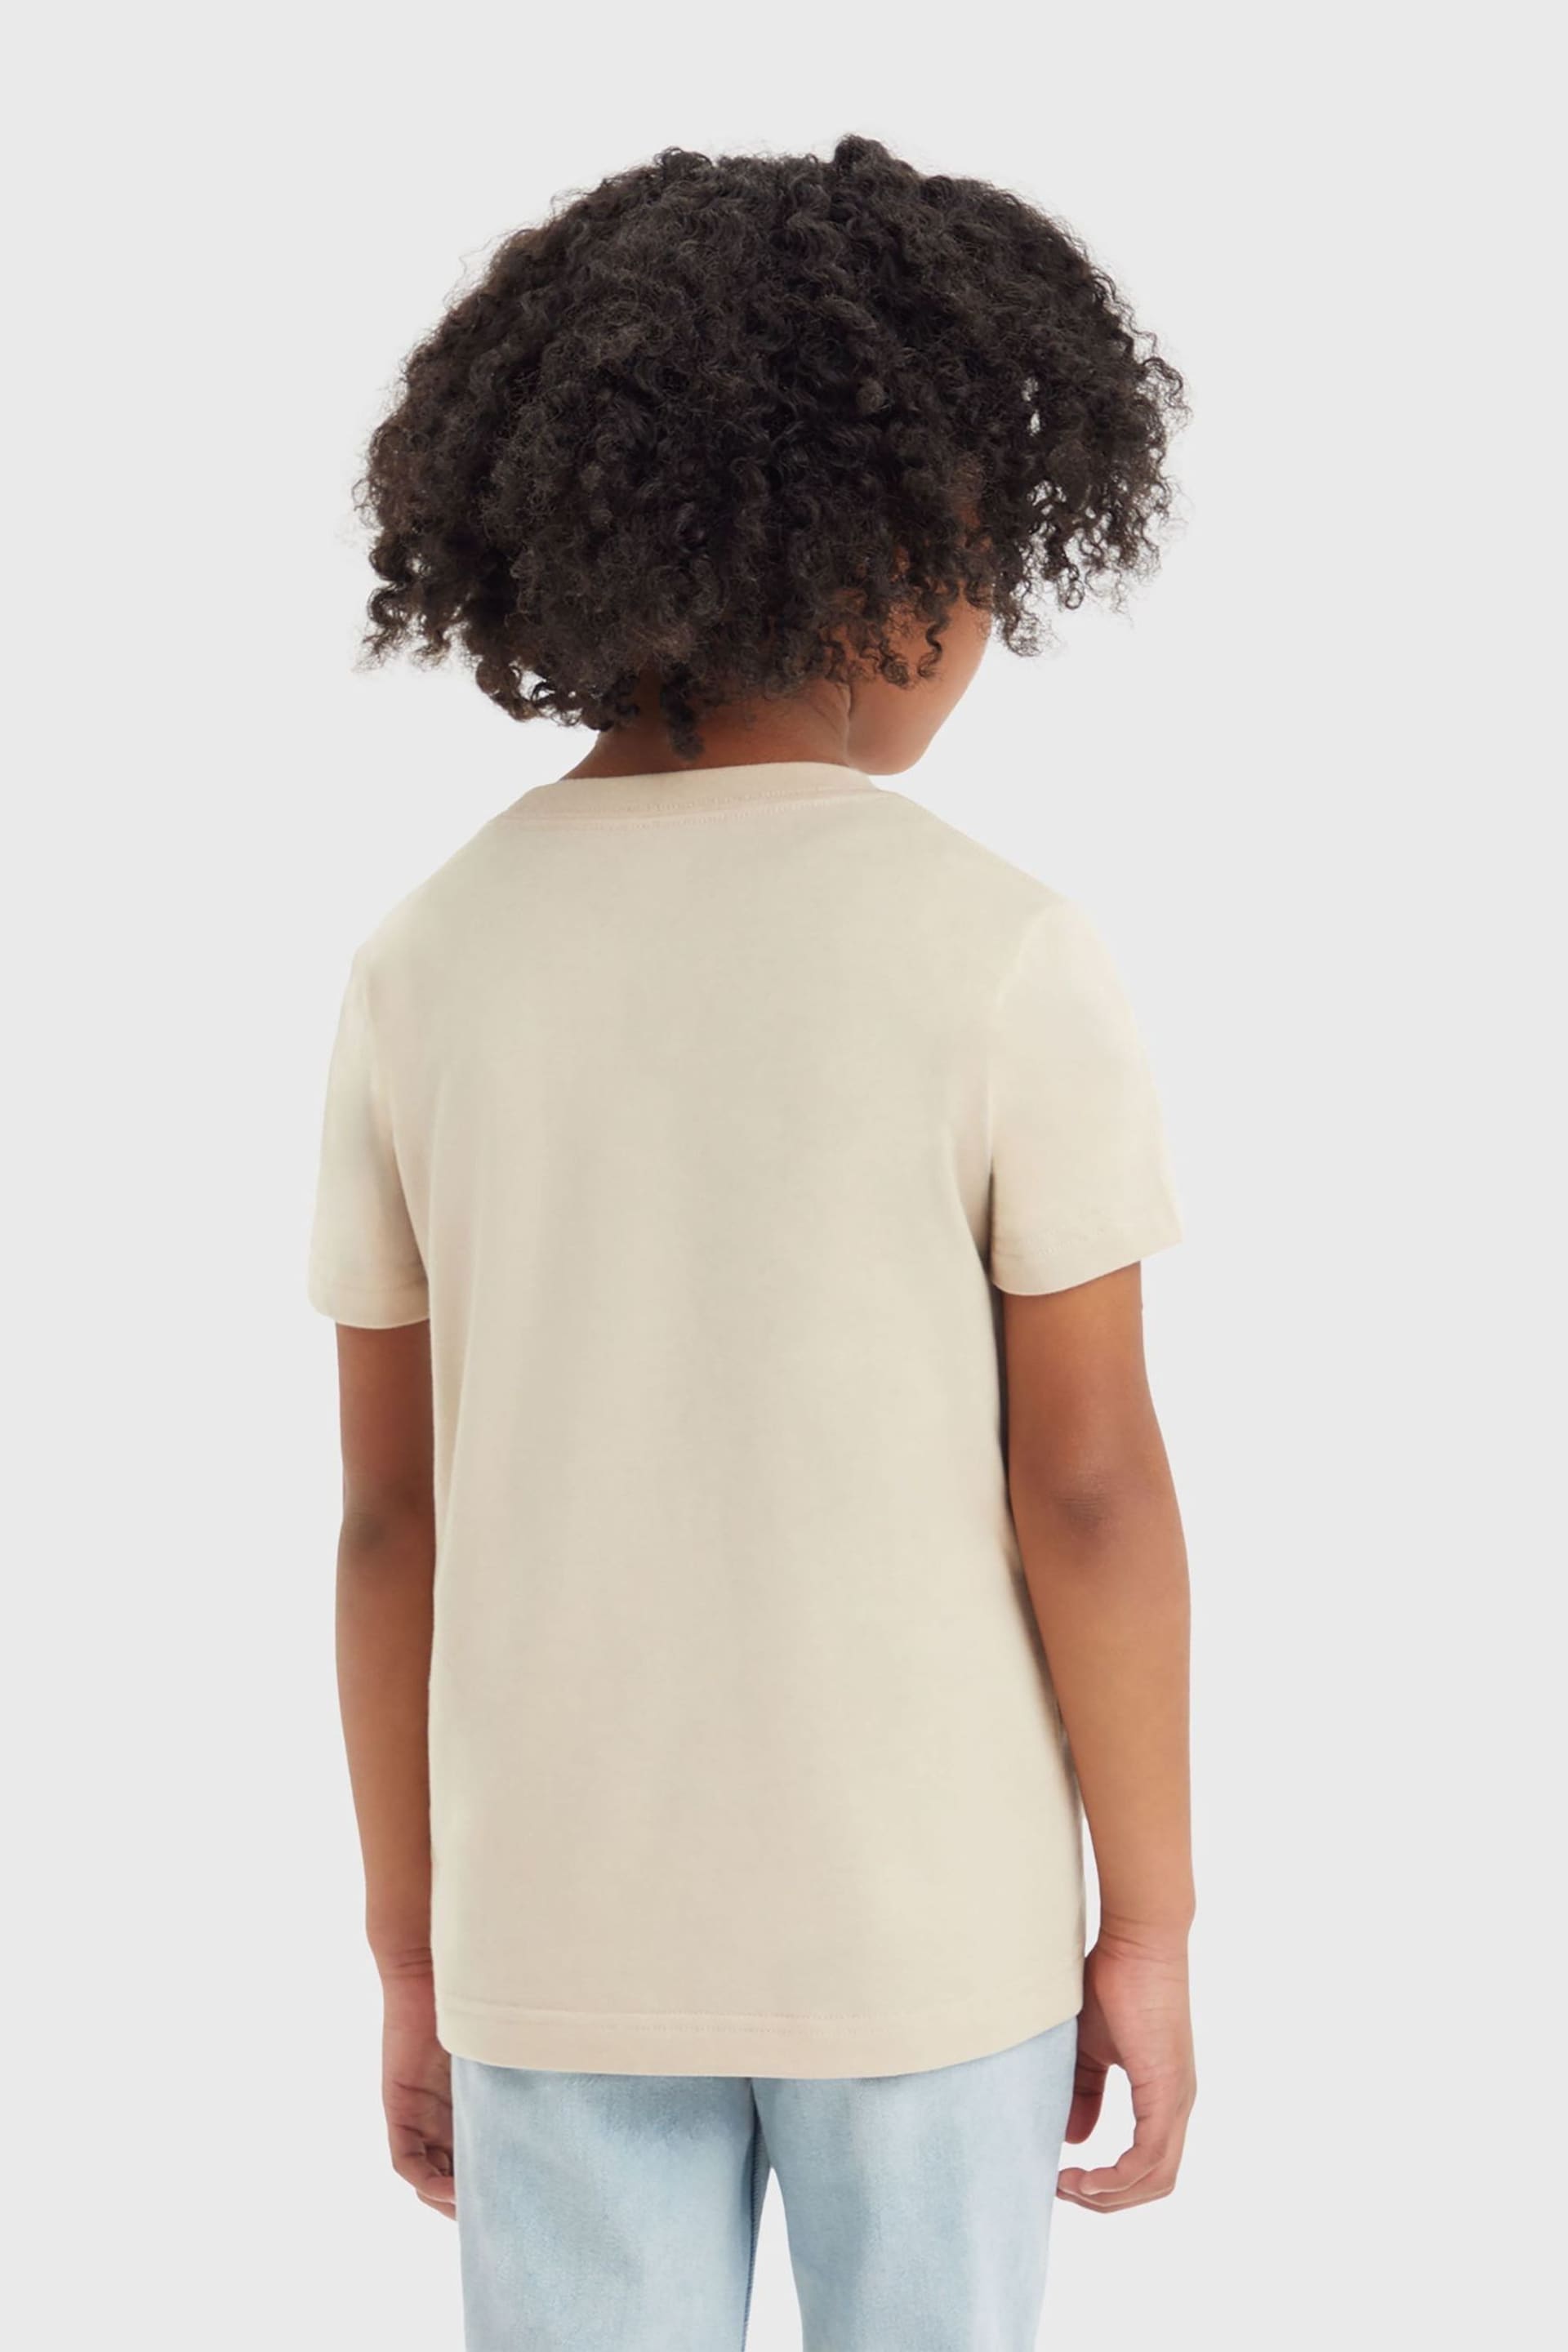 Levi's® Brown Short Sleeve Original Housemark Logo T-Shirt - Image 2 of 7